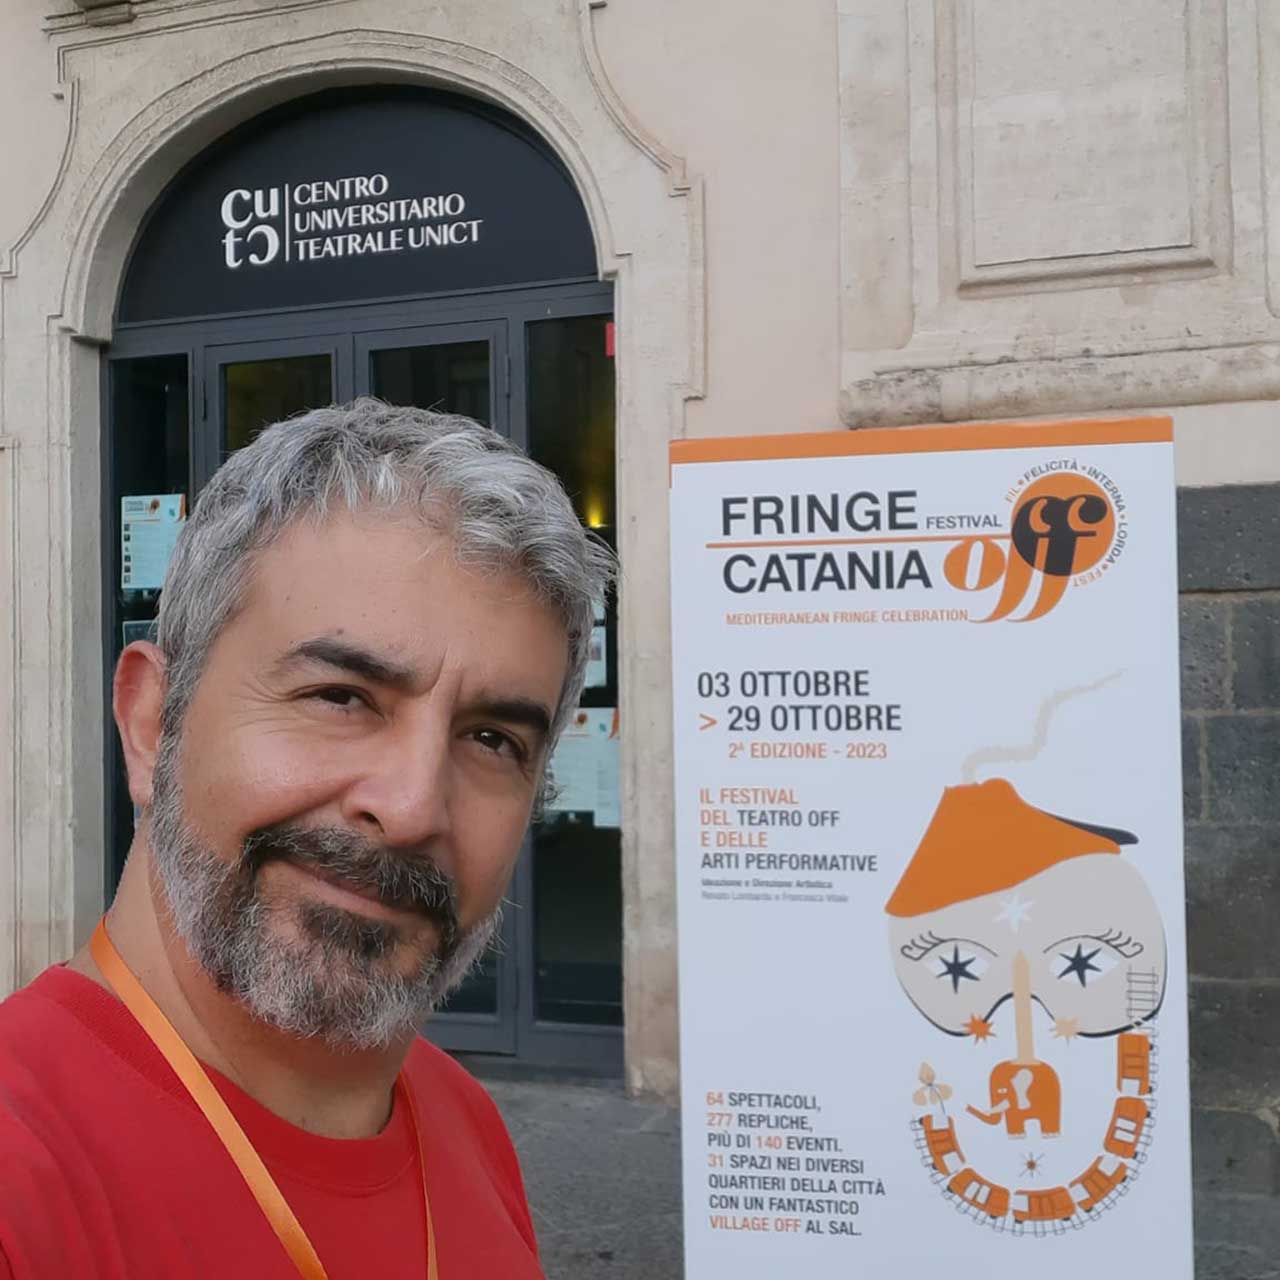 Antonio Brugnano in un selfie davanti al Centro universitario teatrale